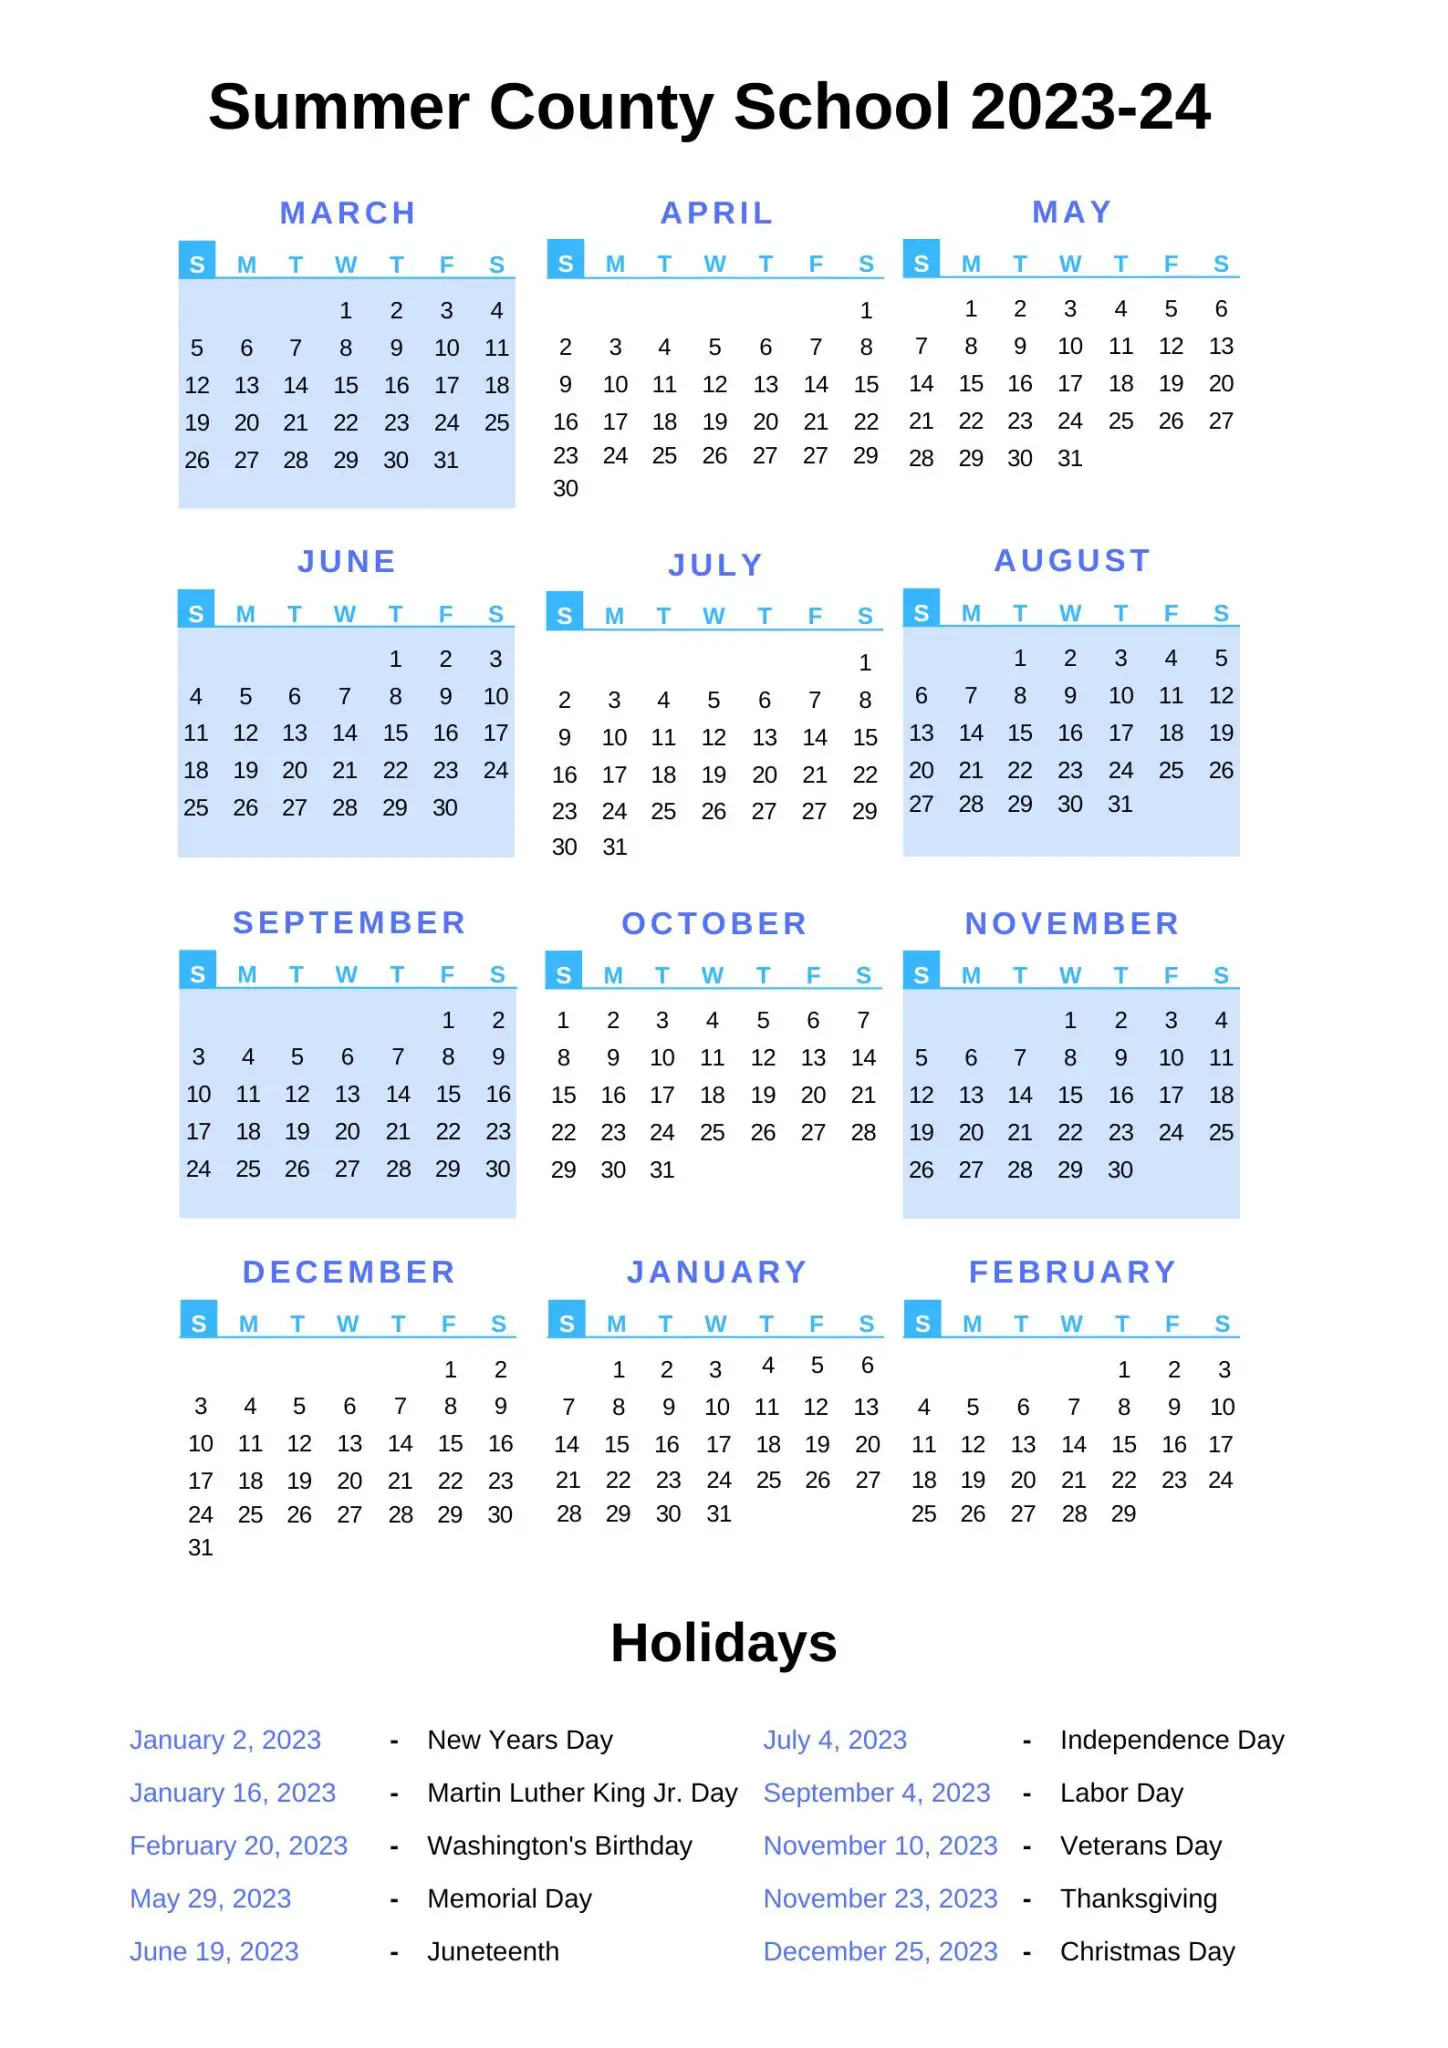 Sumner County Schools Calendar 2023-24 With Holidays